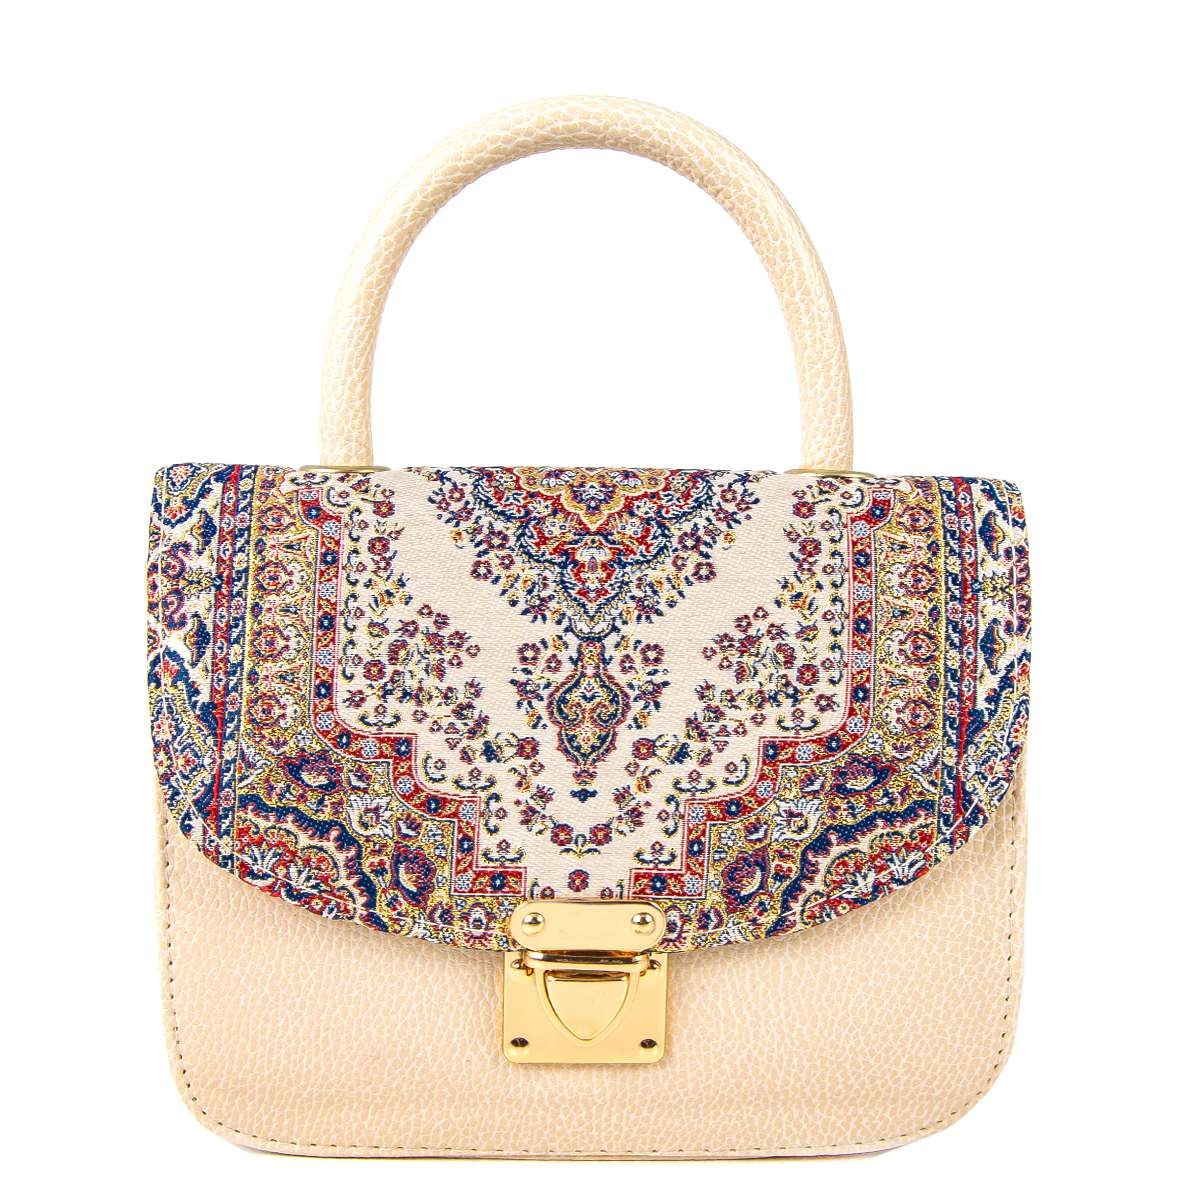 Luxury Turkish Handcrafted Bag - Exquisite Artisanal Elegance, Vintage style